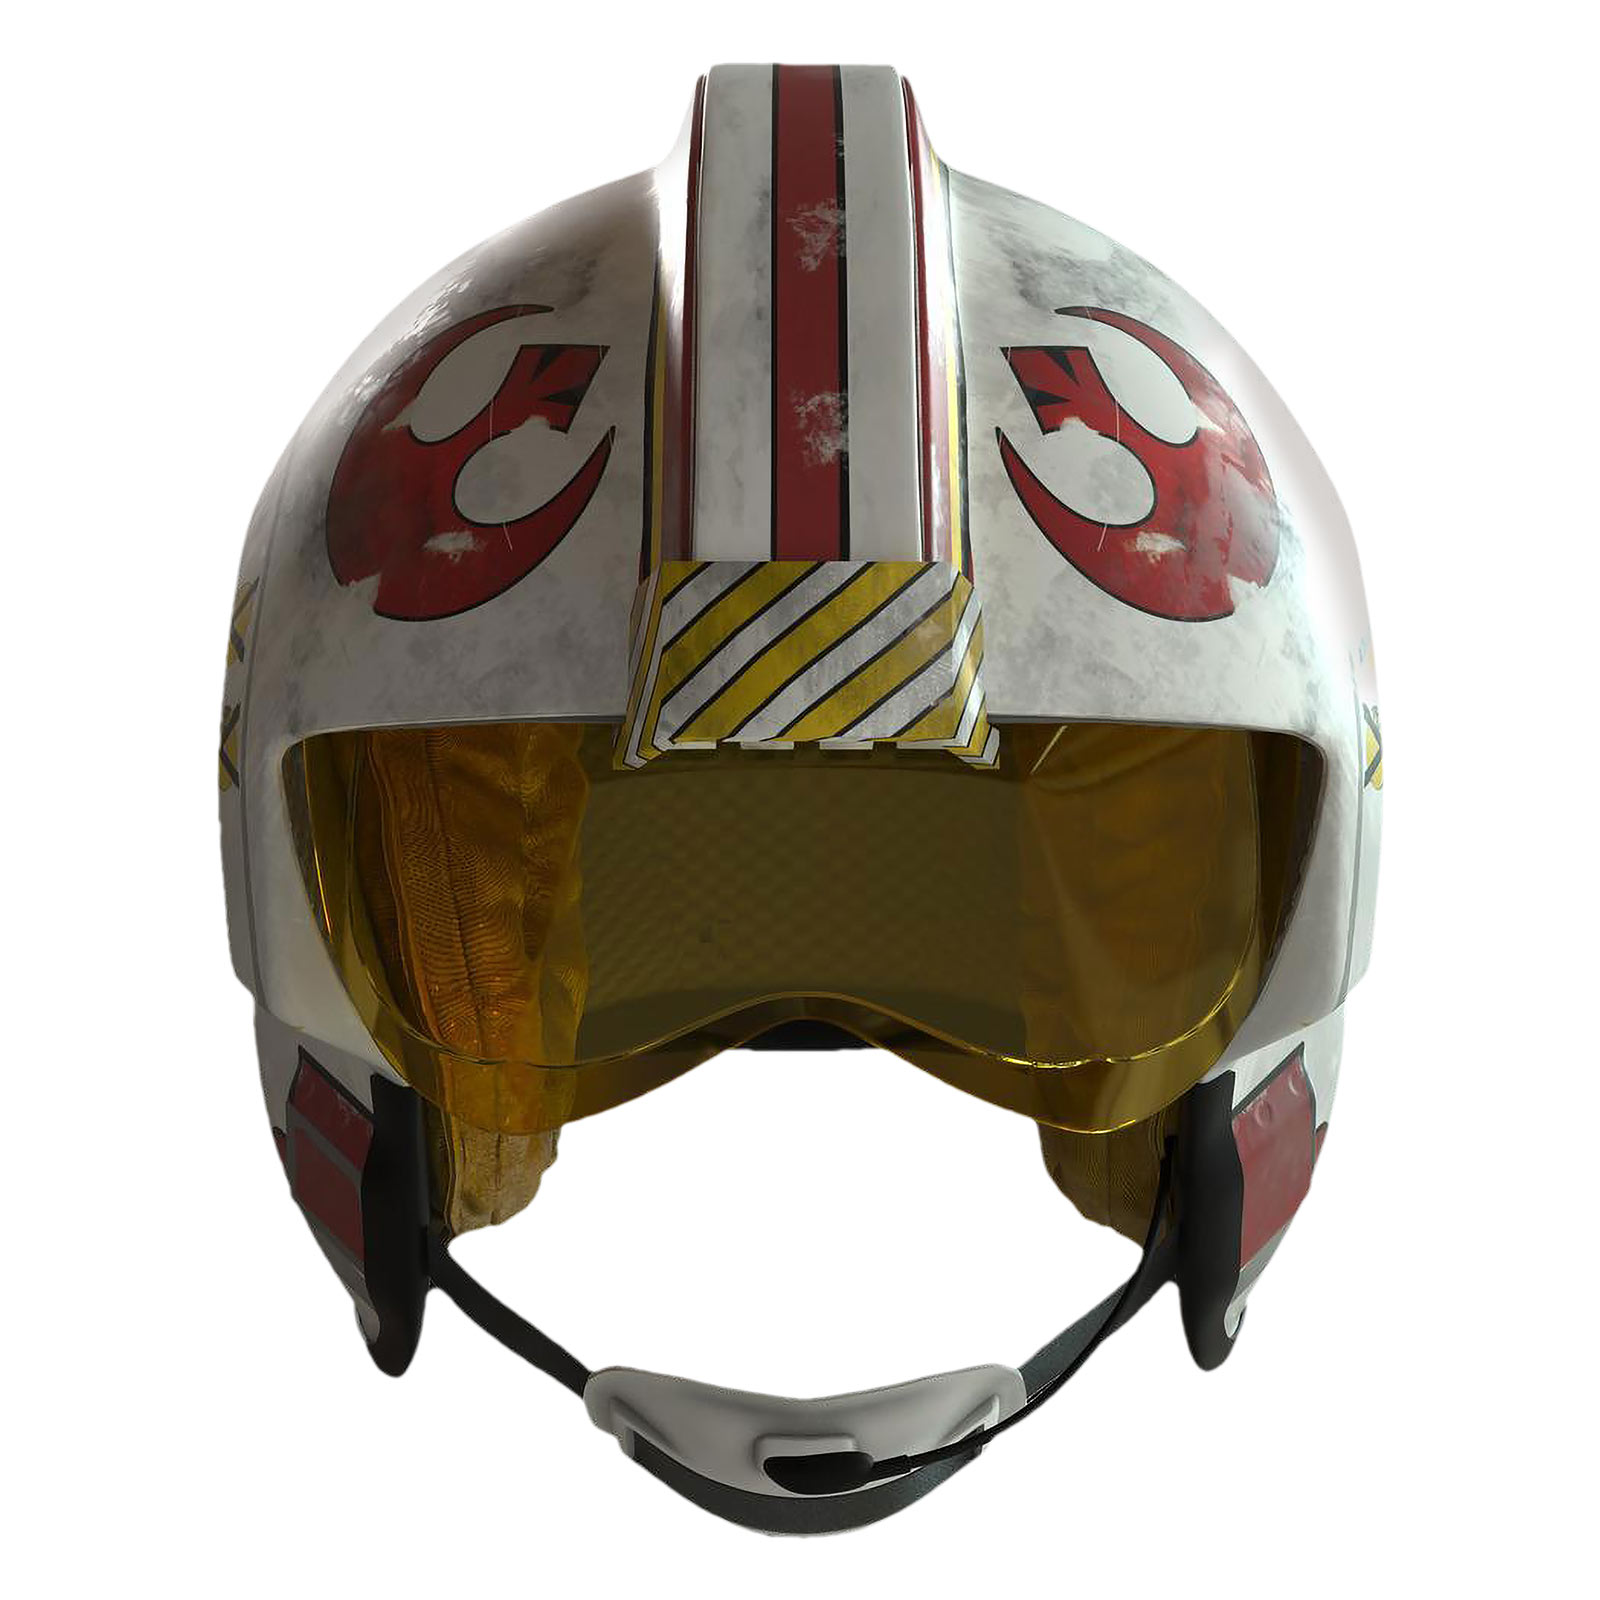 Star Wars - Luke Skywalker Helmet Replica with Light and Sound Effects